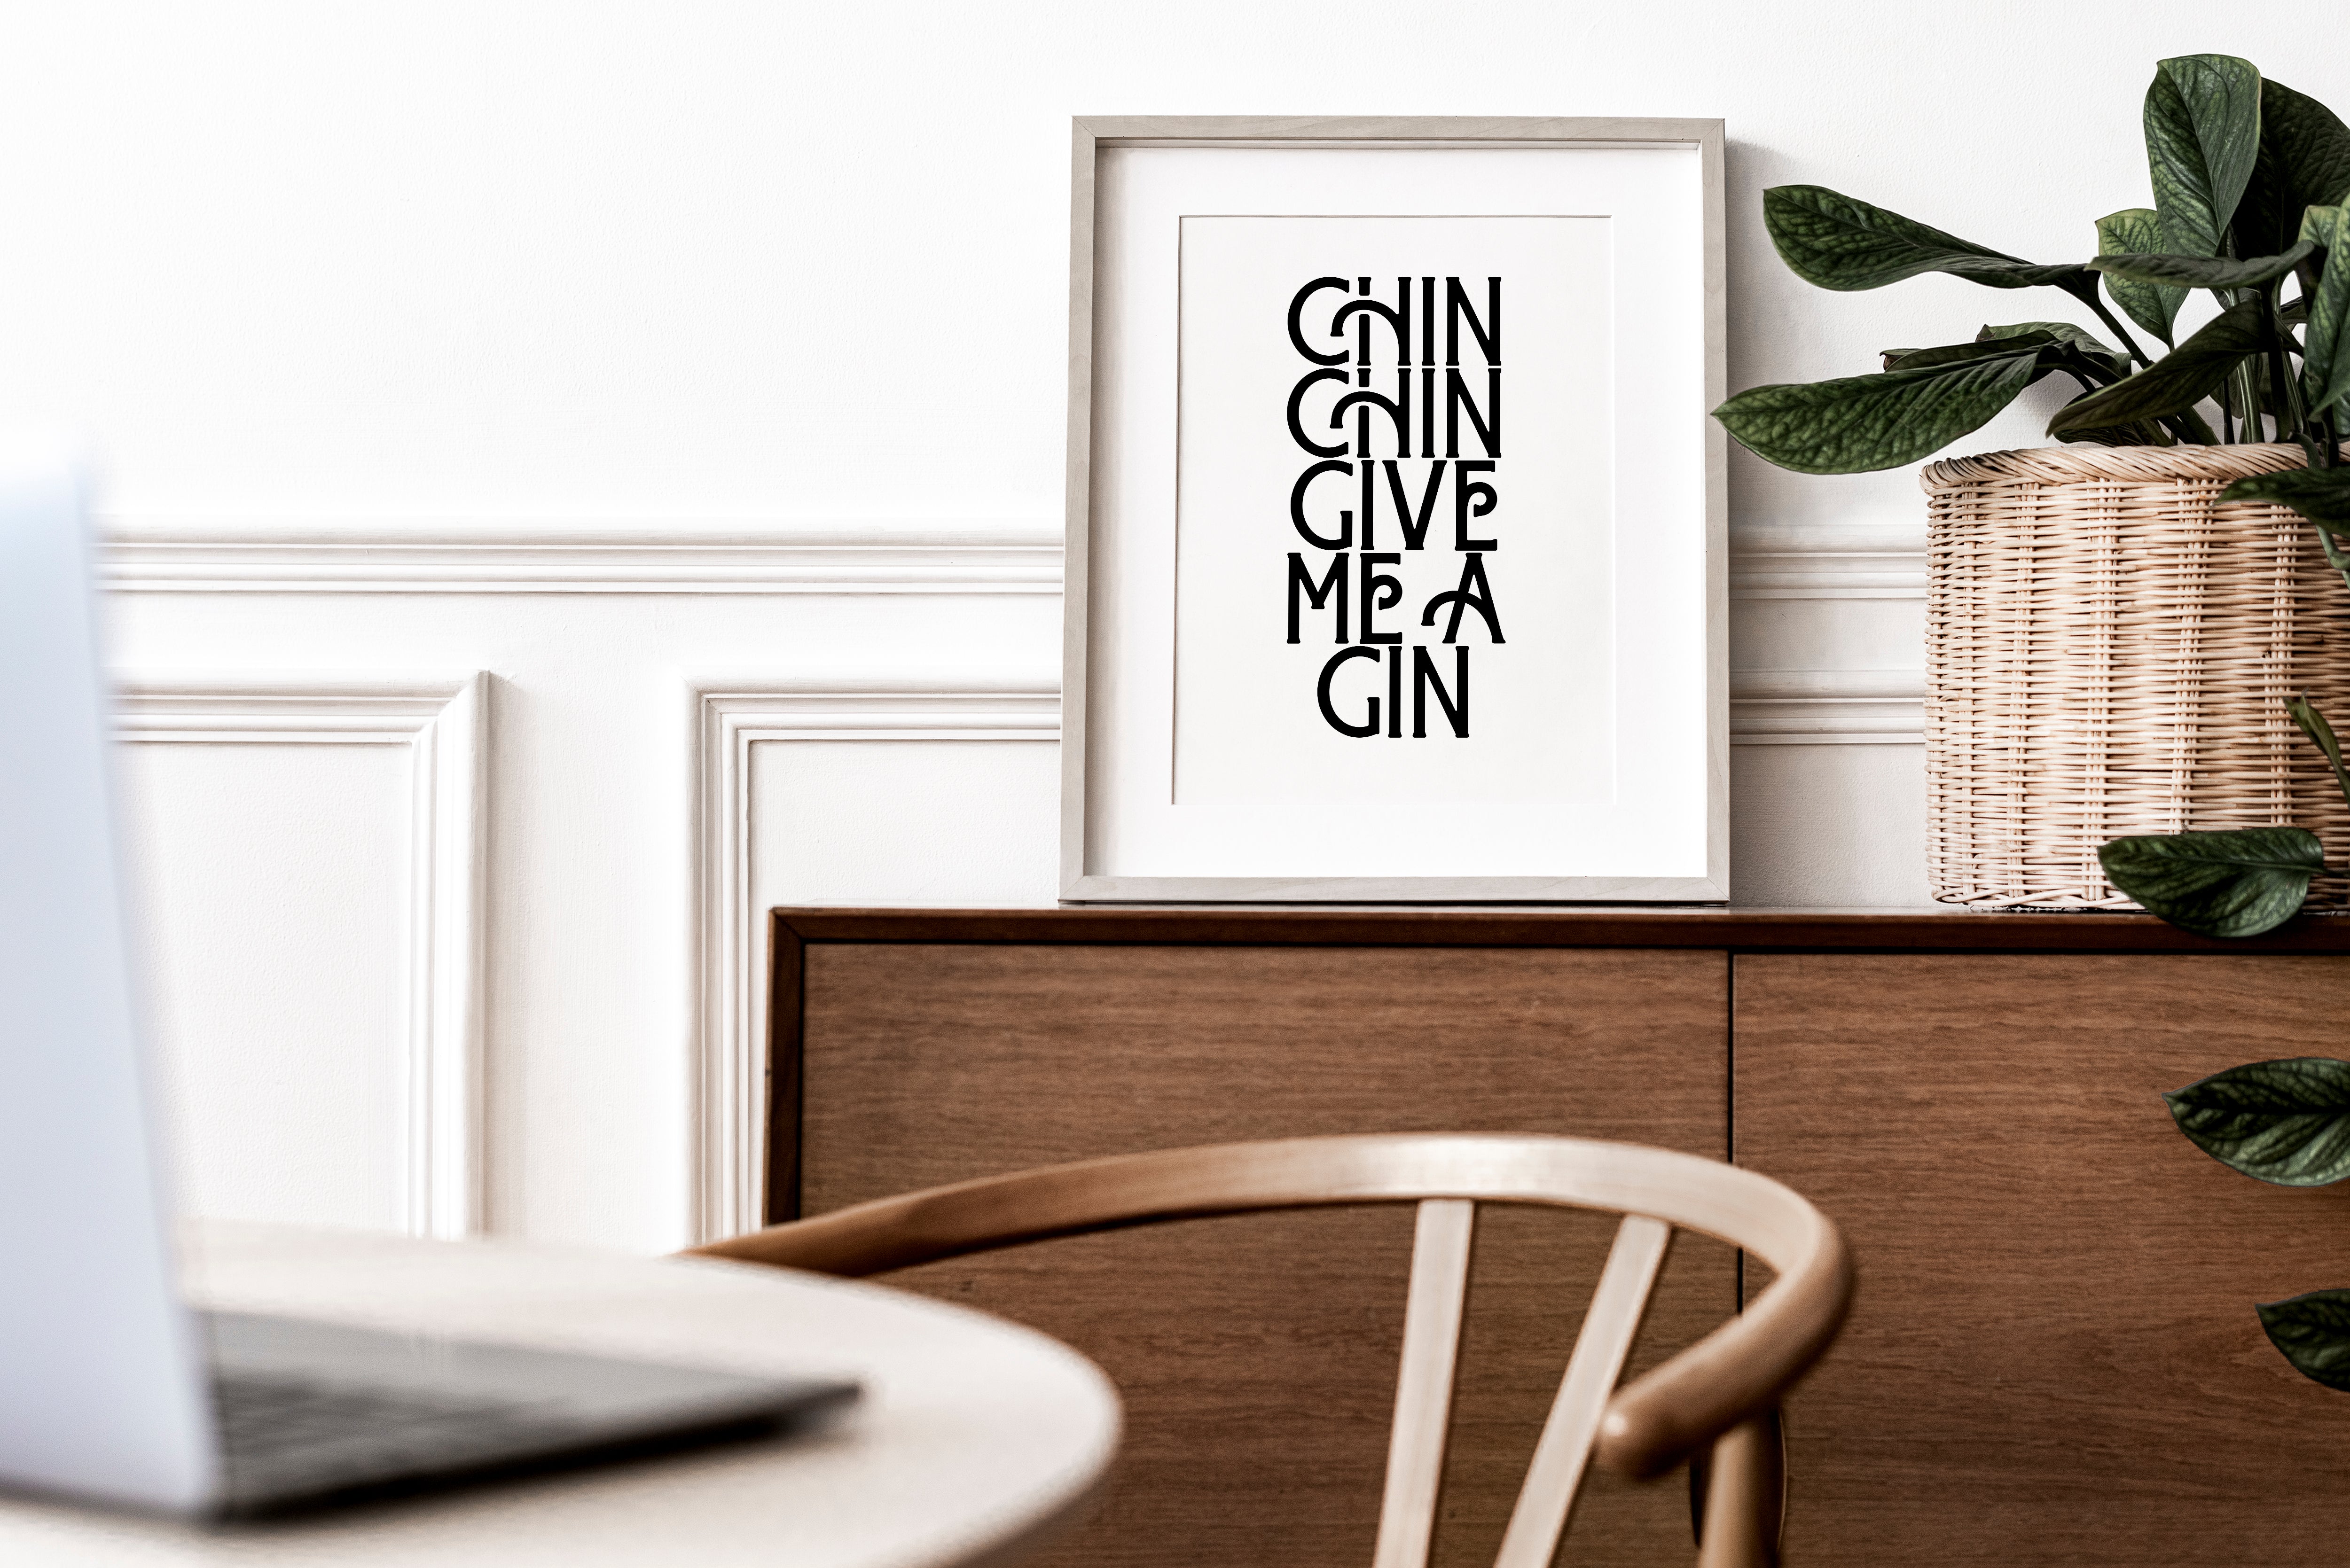 Chin Chin Give Me A Gin Print